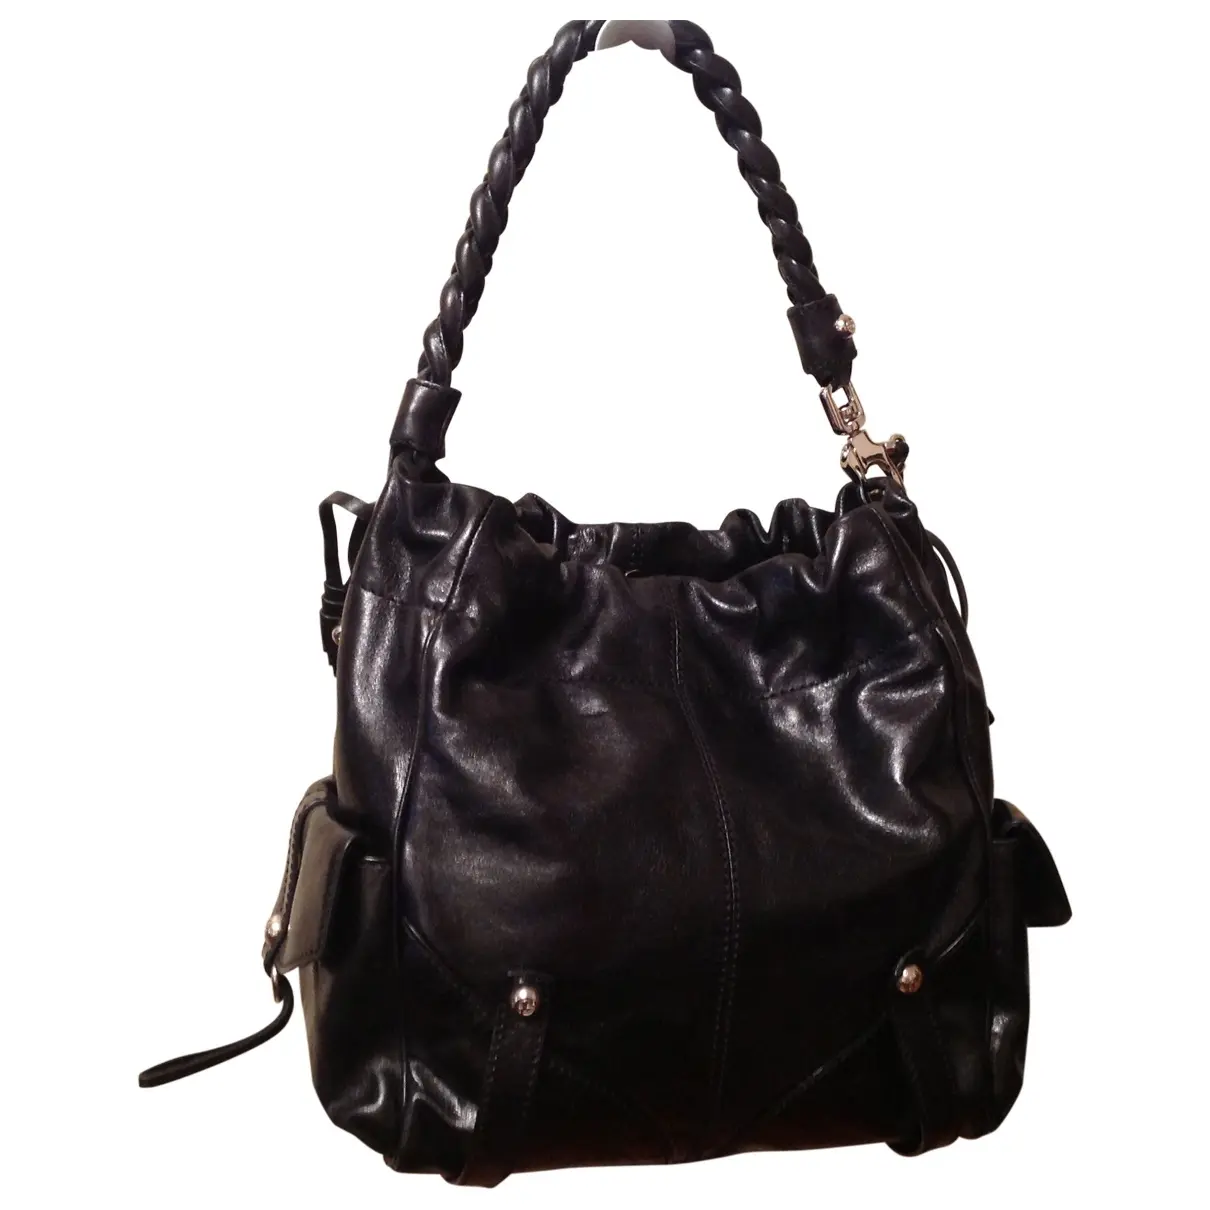 Leather handbag FRANCESCO BIASIA